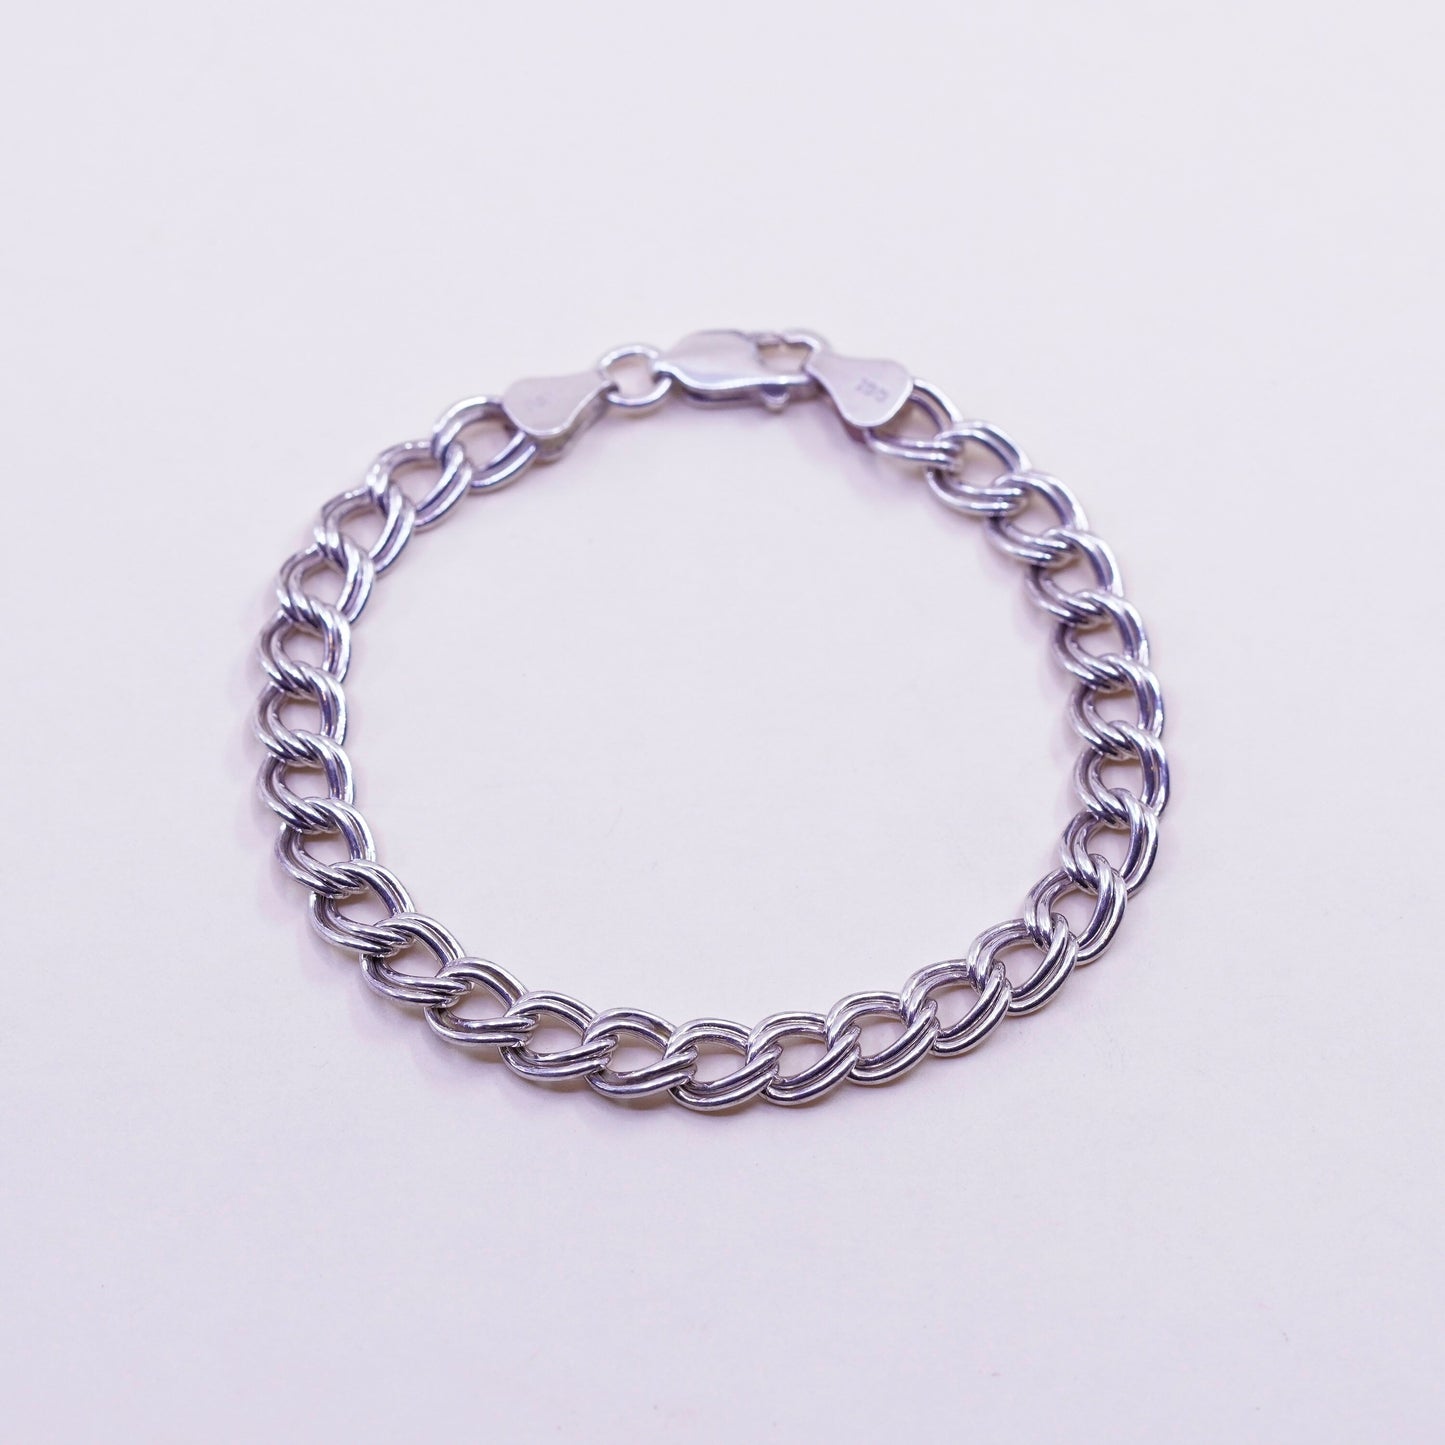 7”, 7mm, Vintage sterling silver double curb bracelet, 925 chain